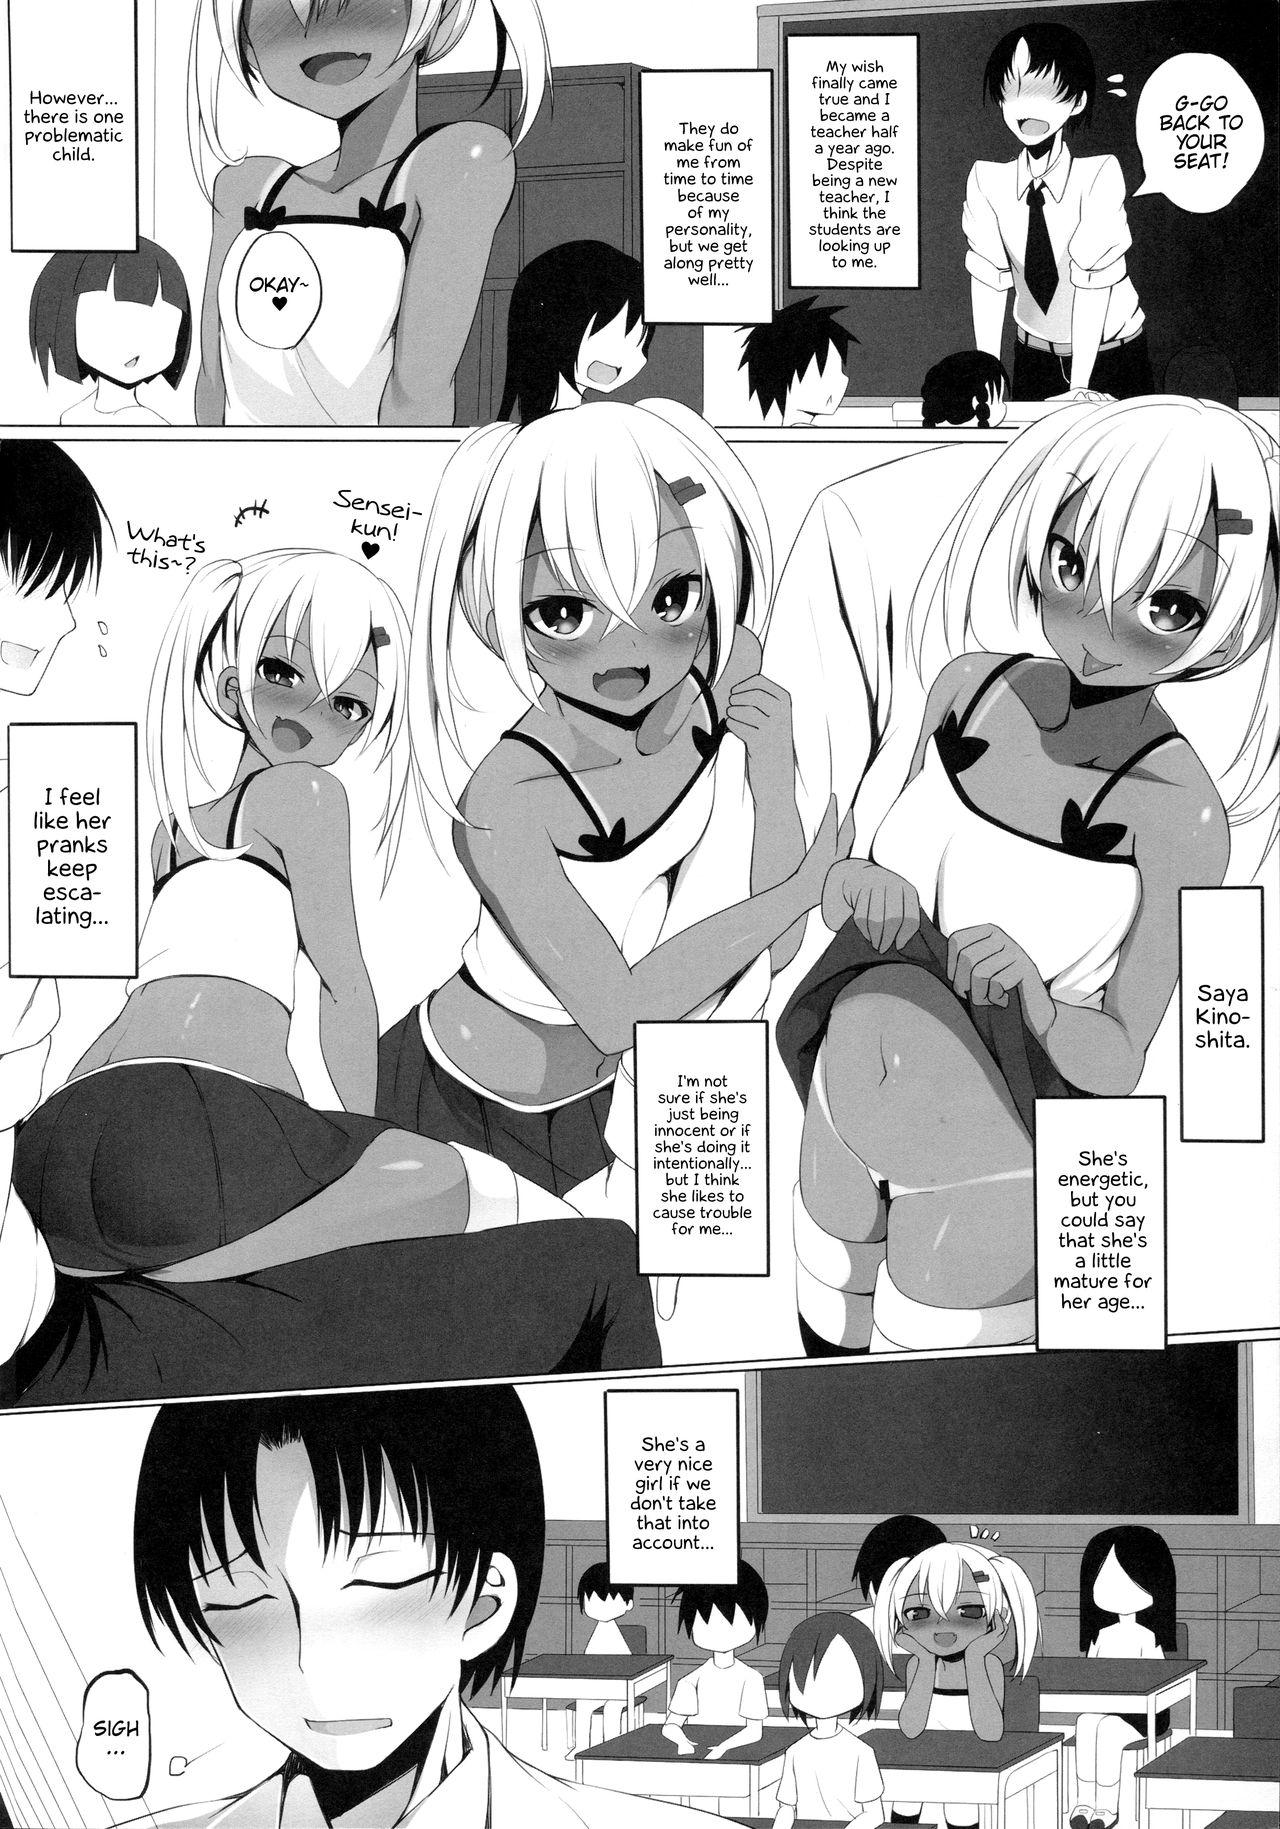 Topless Black Bitch Girl - Original Analfucking - Page 3